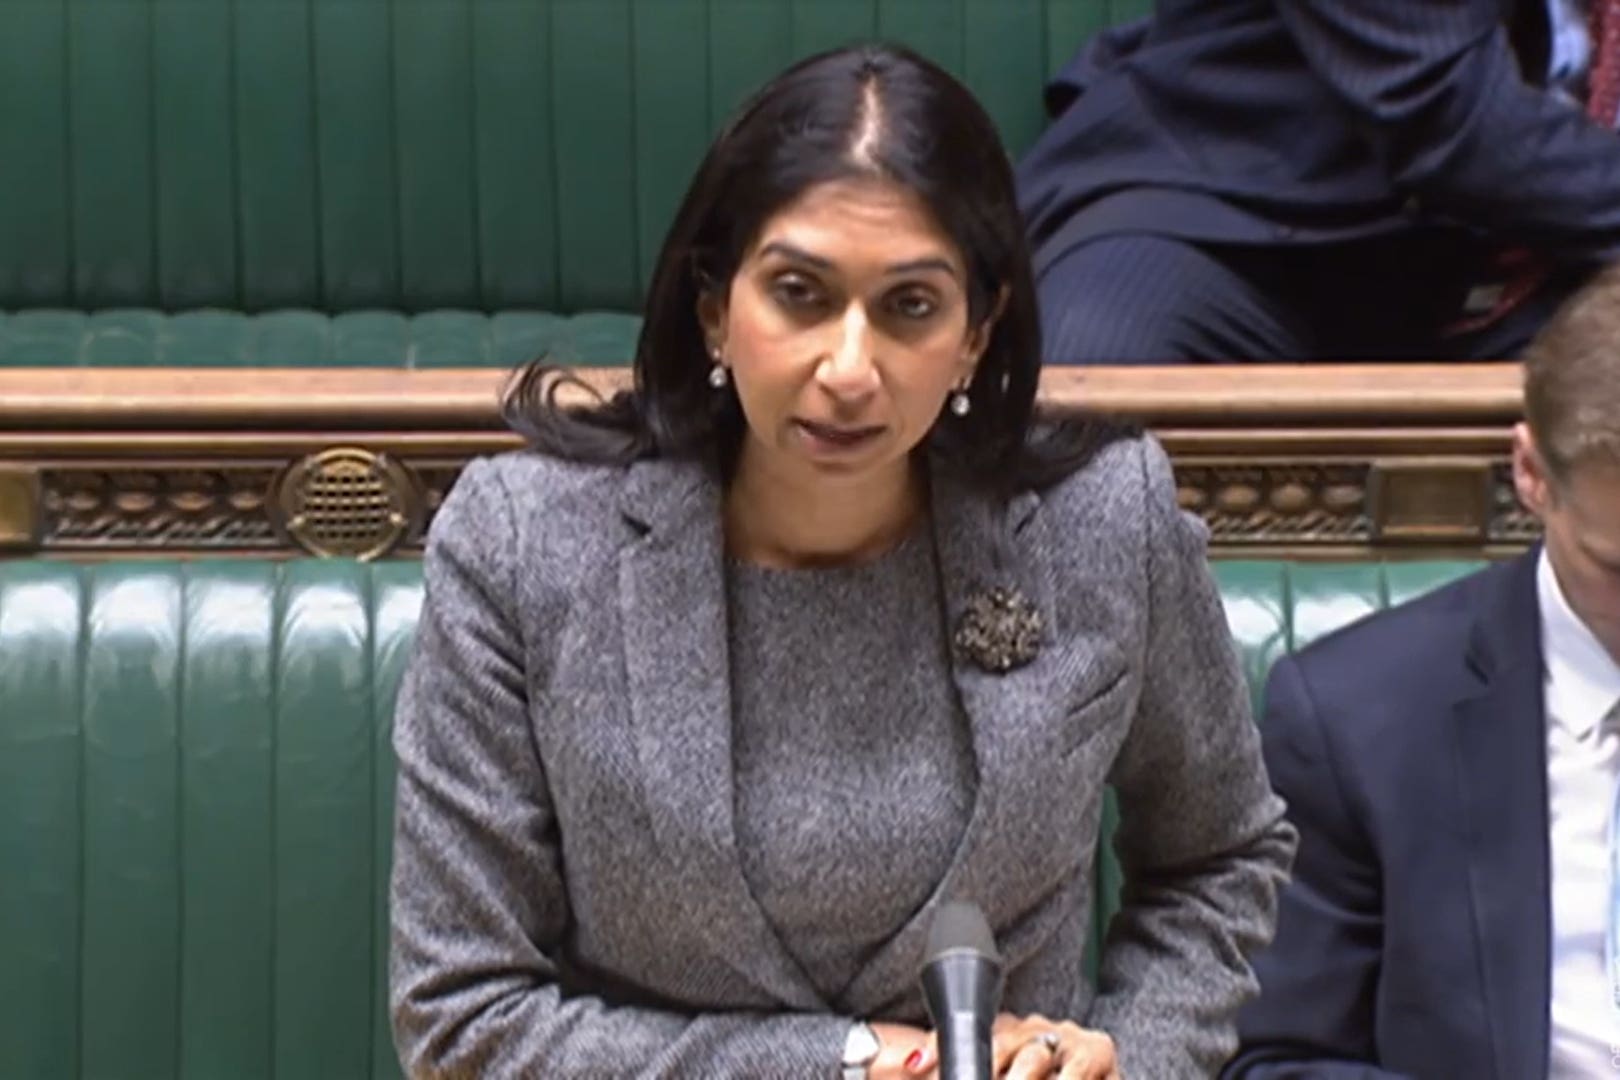 Home Secretary Suella Braverman’s statements on asylum caseworkers have angered civil servants